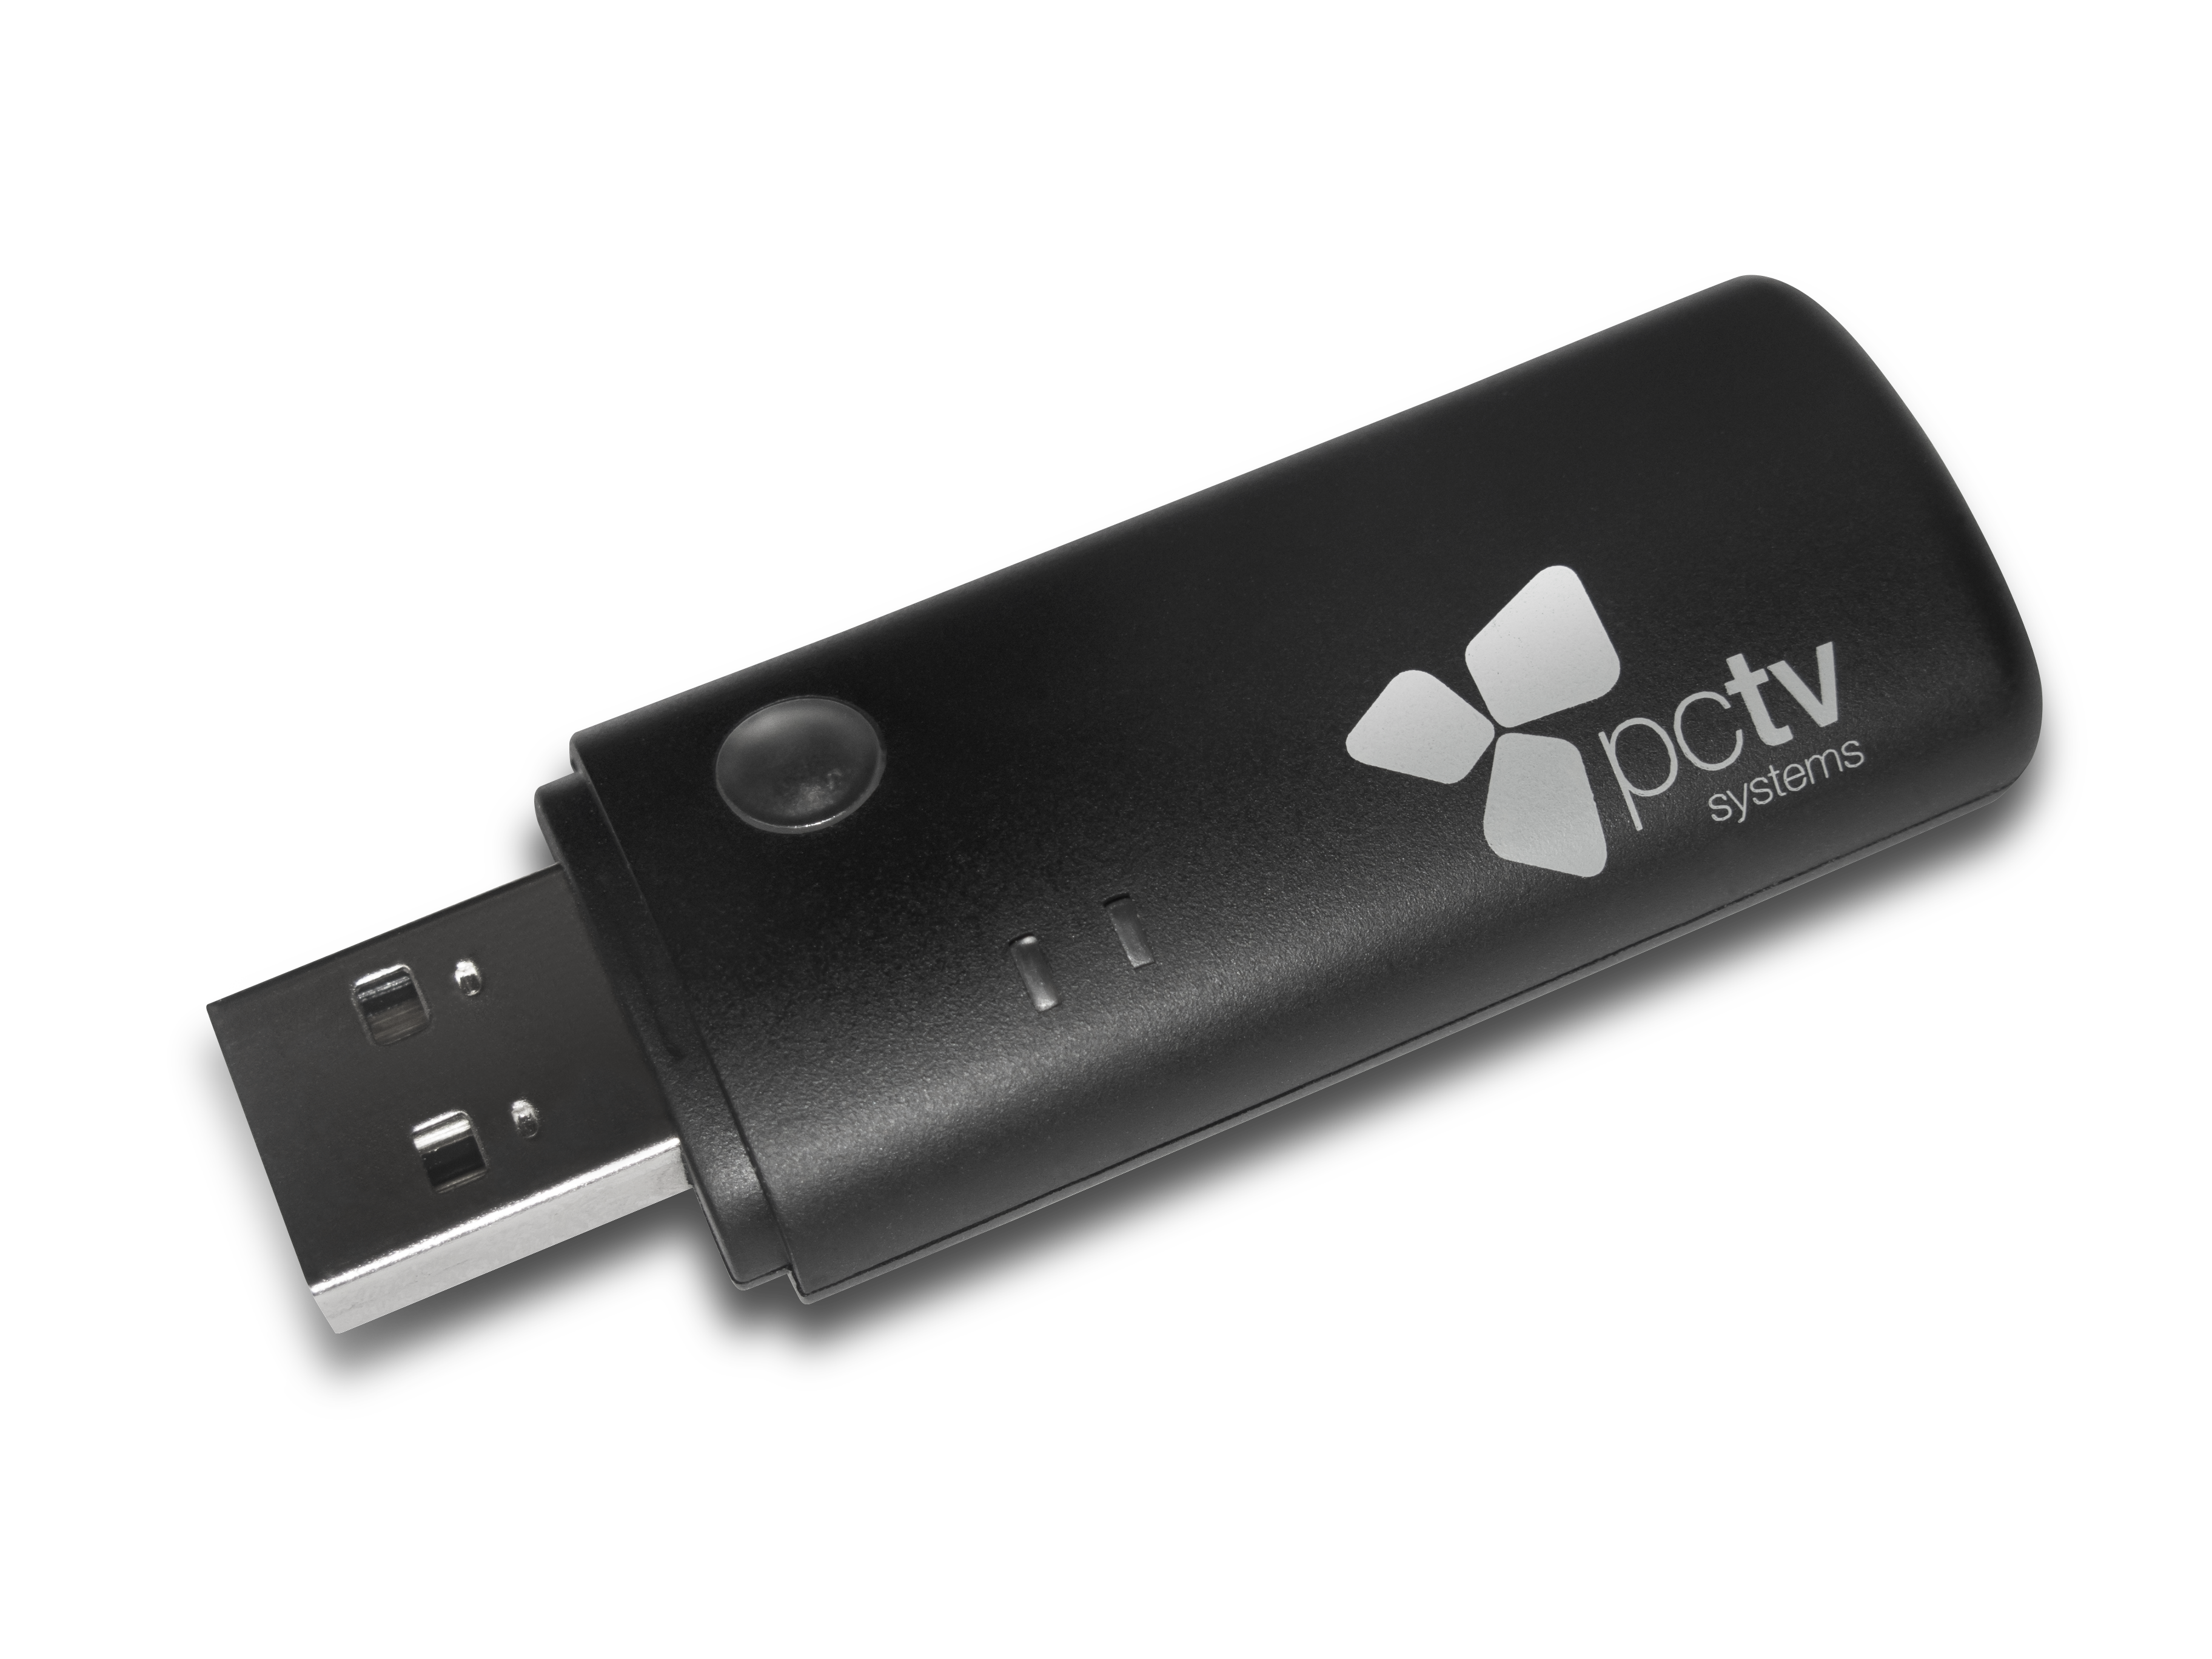 Car Digital DVB-T2 TV Receiver Signal, HDMI Car TV Tuner, Support MPEG-1 -2  -4 